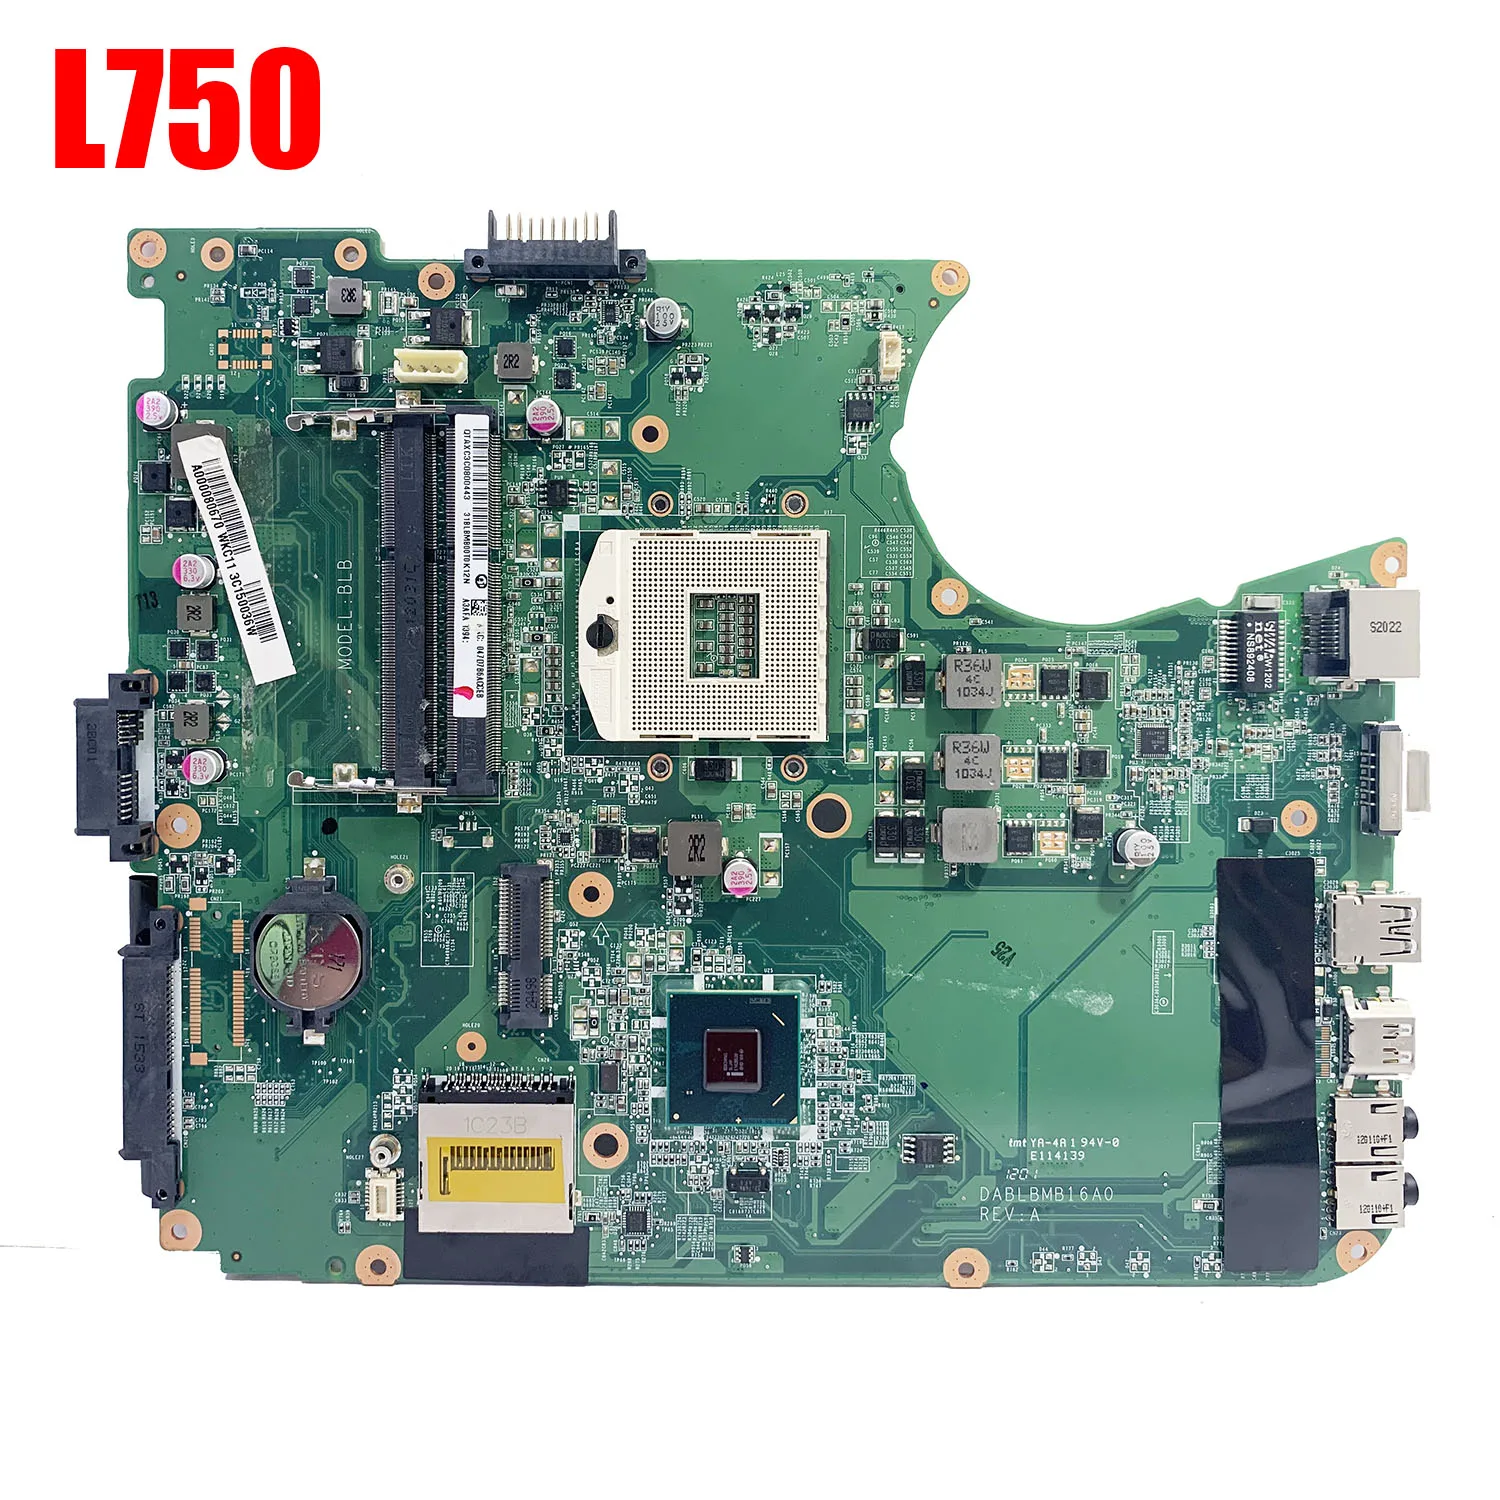 L755 Motherboard Mainboard Main Board HM65 DA0BLBMB6A0 A000080670 Notebook Pc for Toshiba L700 L750 L755 Laptop Motherboard DDR3